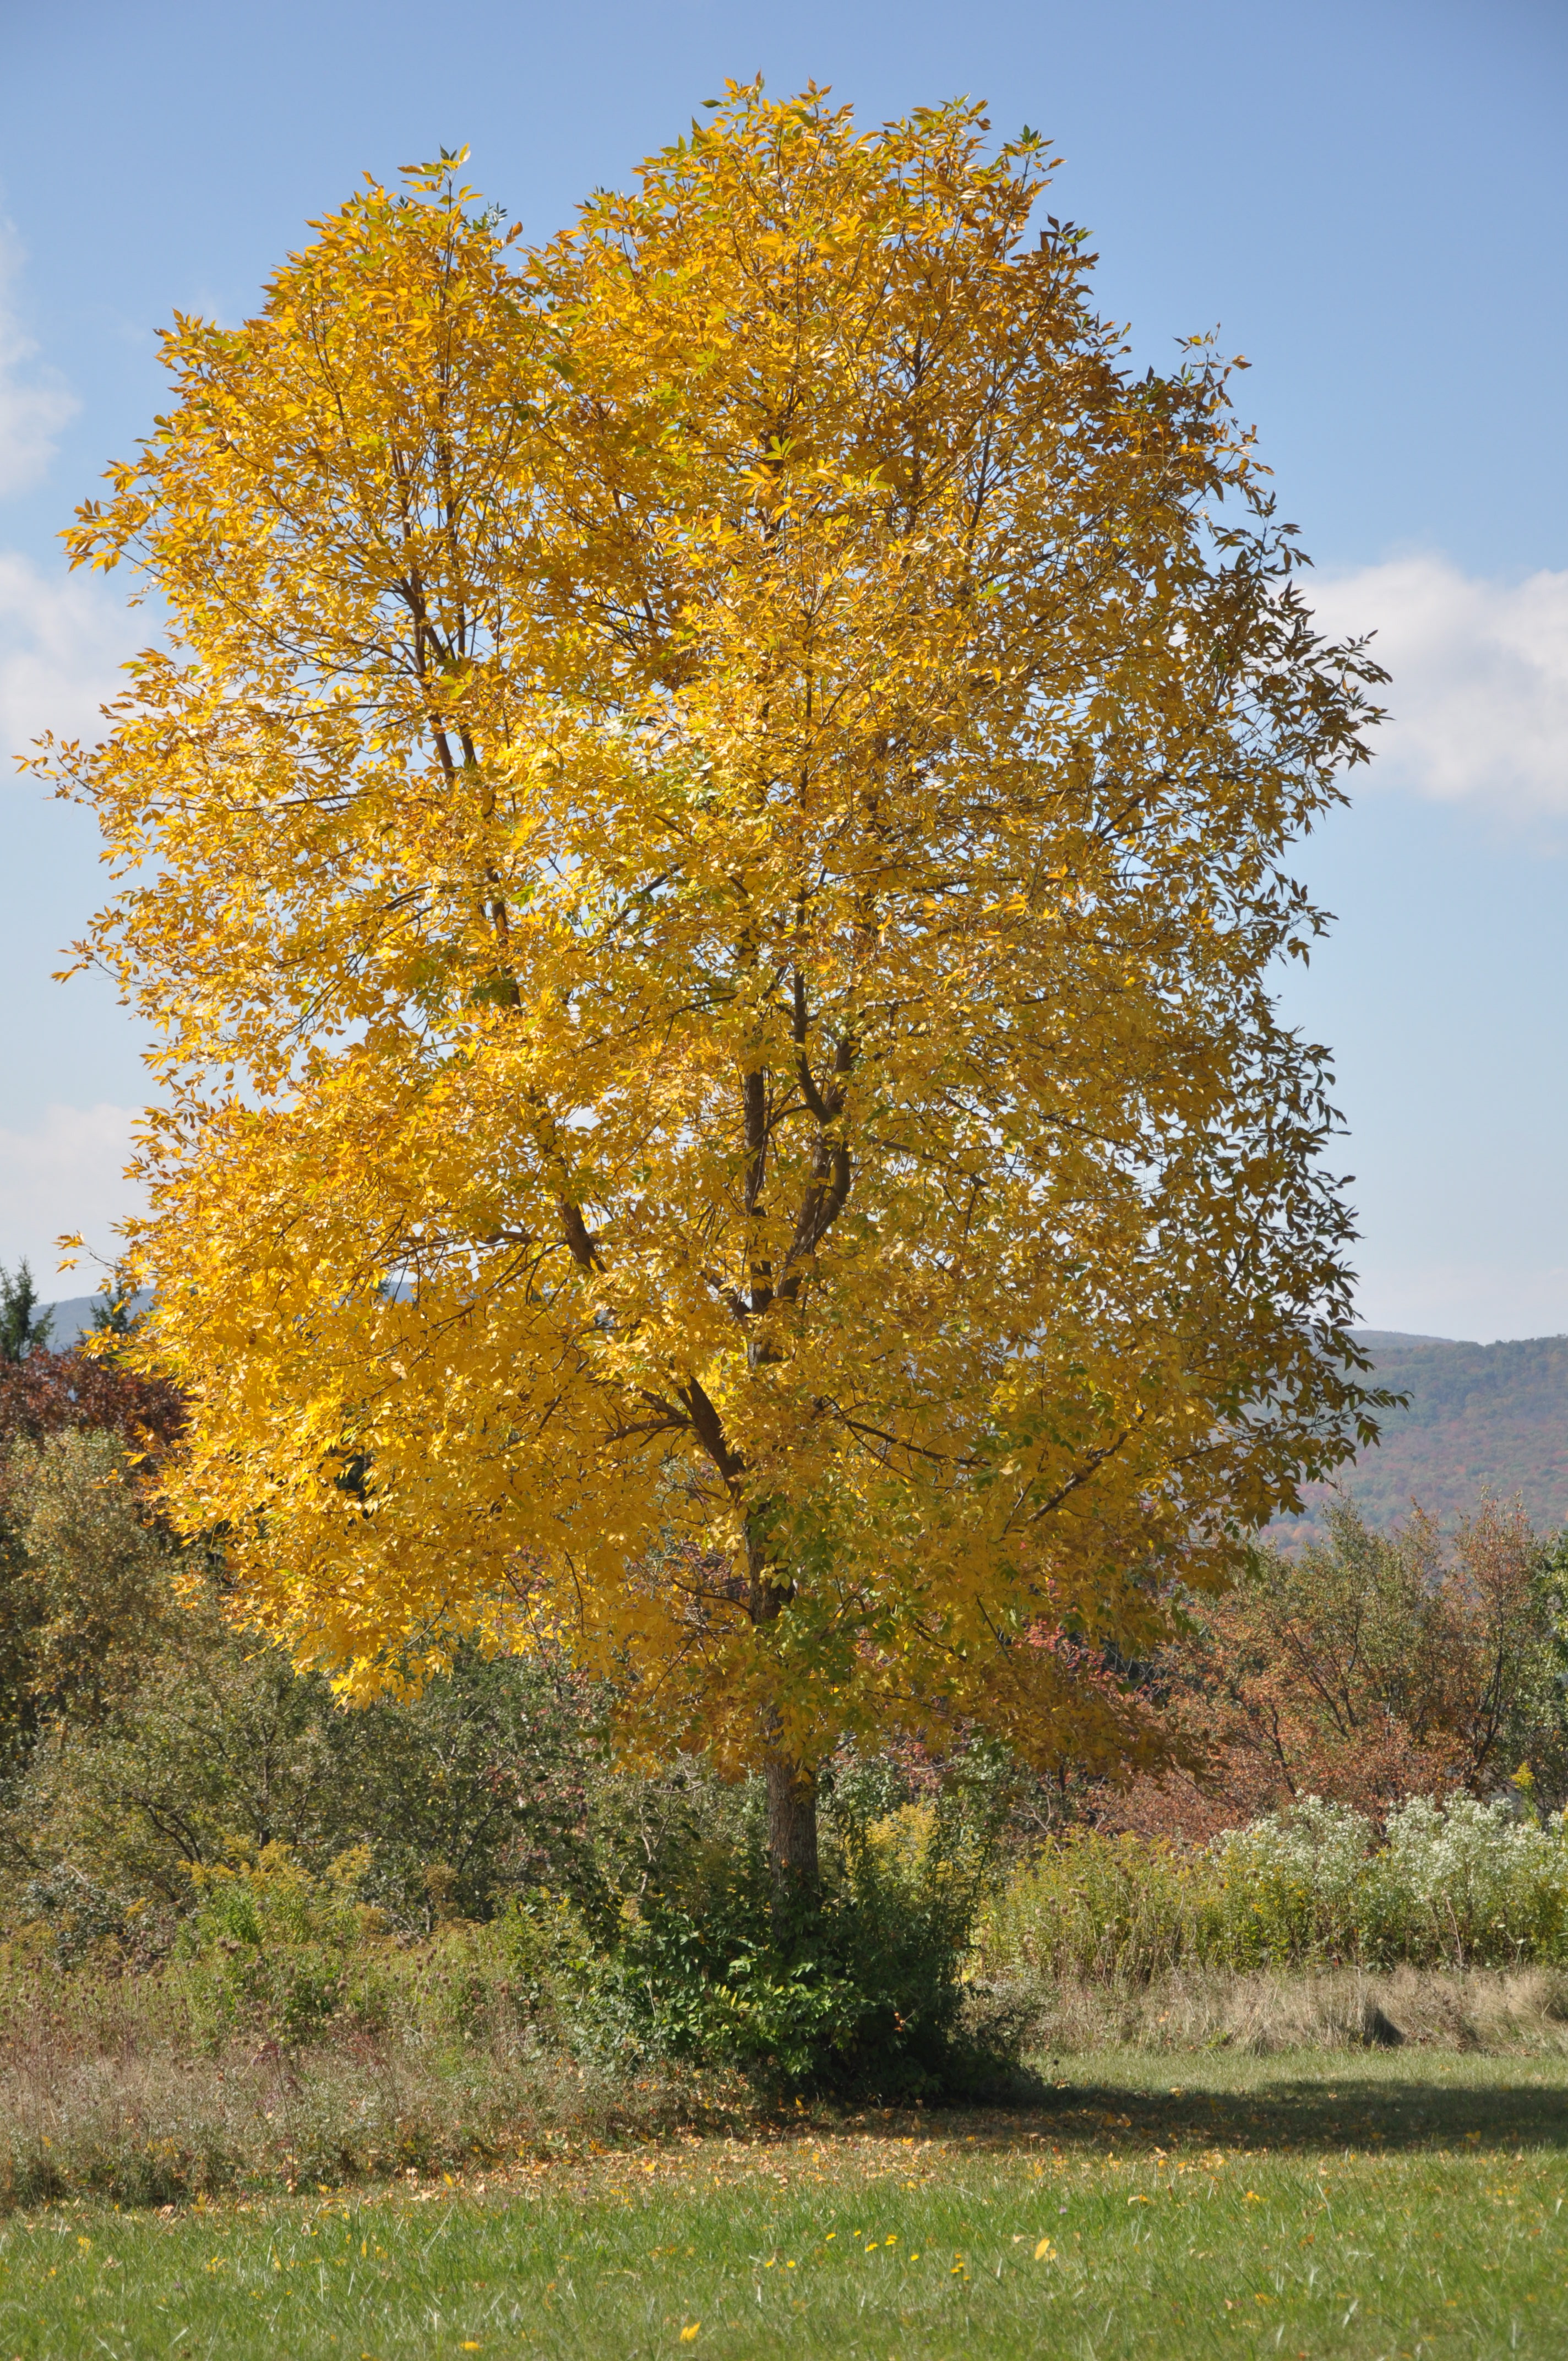 yellow leaves tree